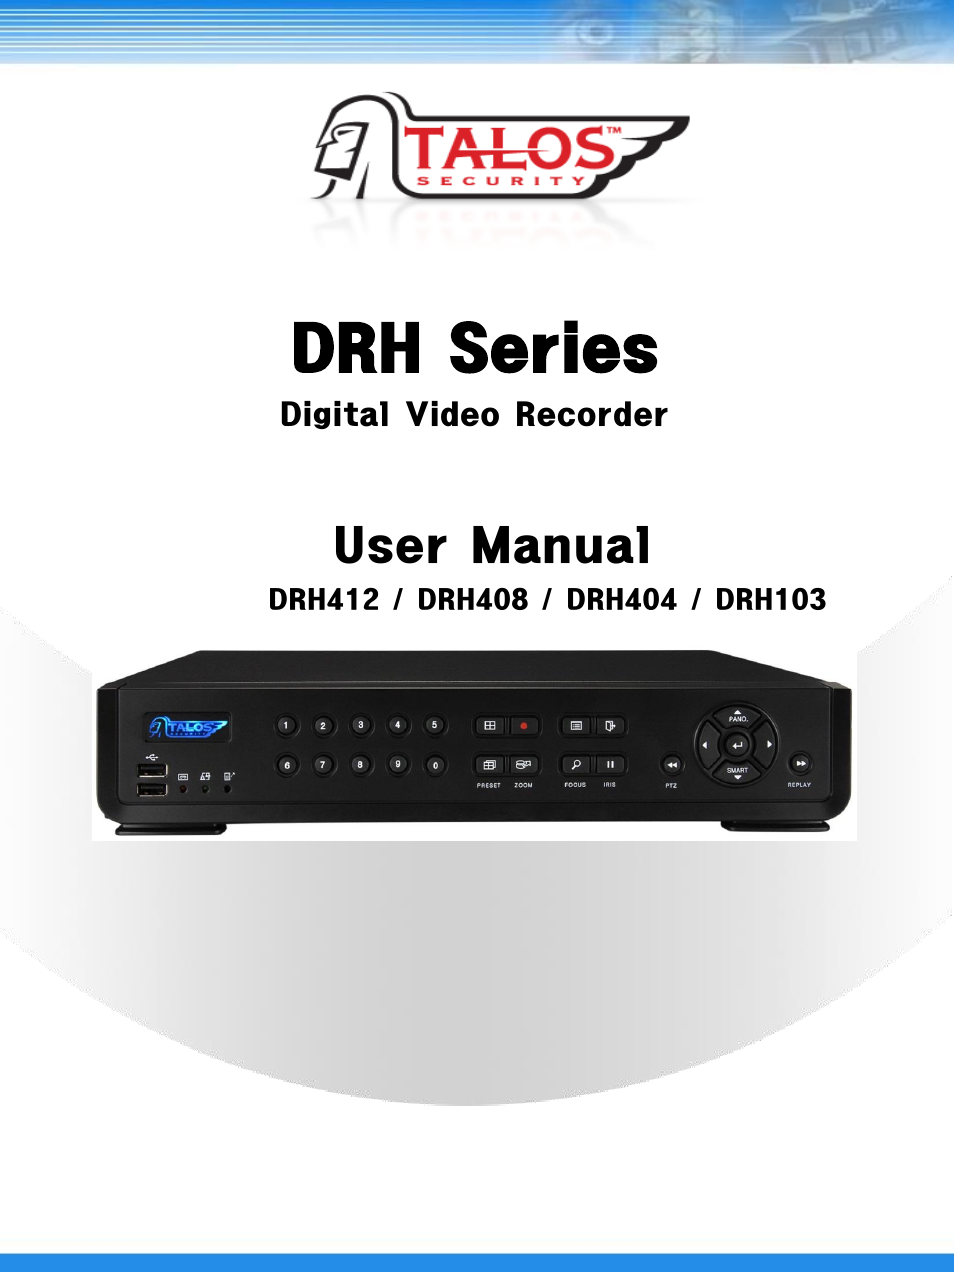 DRH103 Hybrid DVR Manual